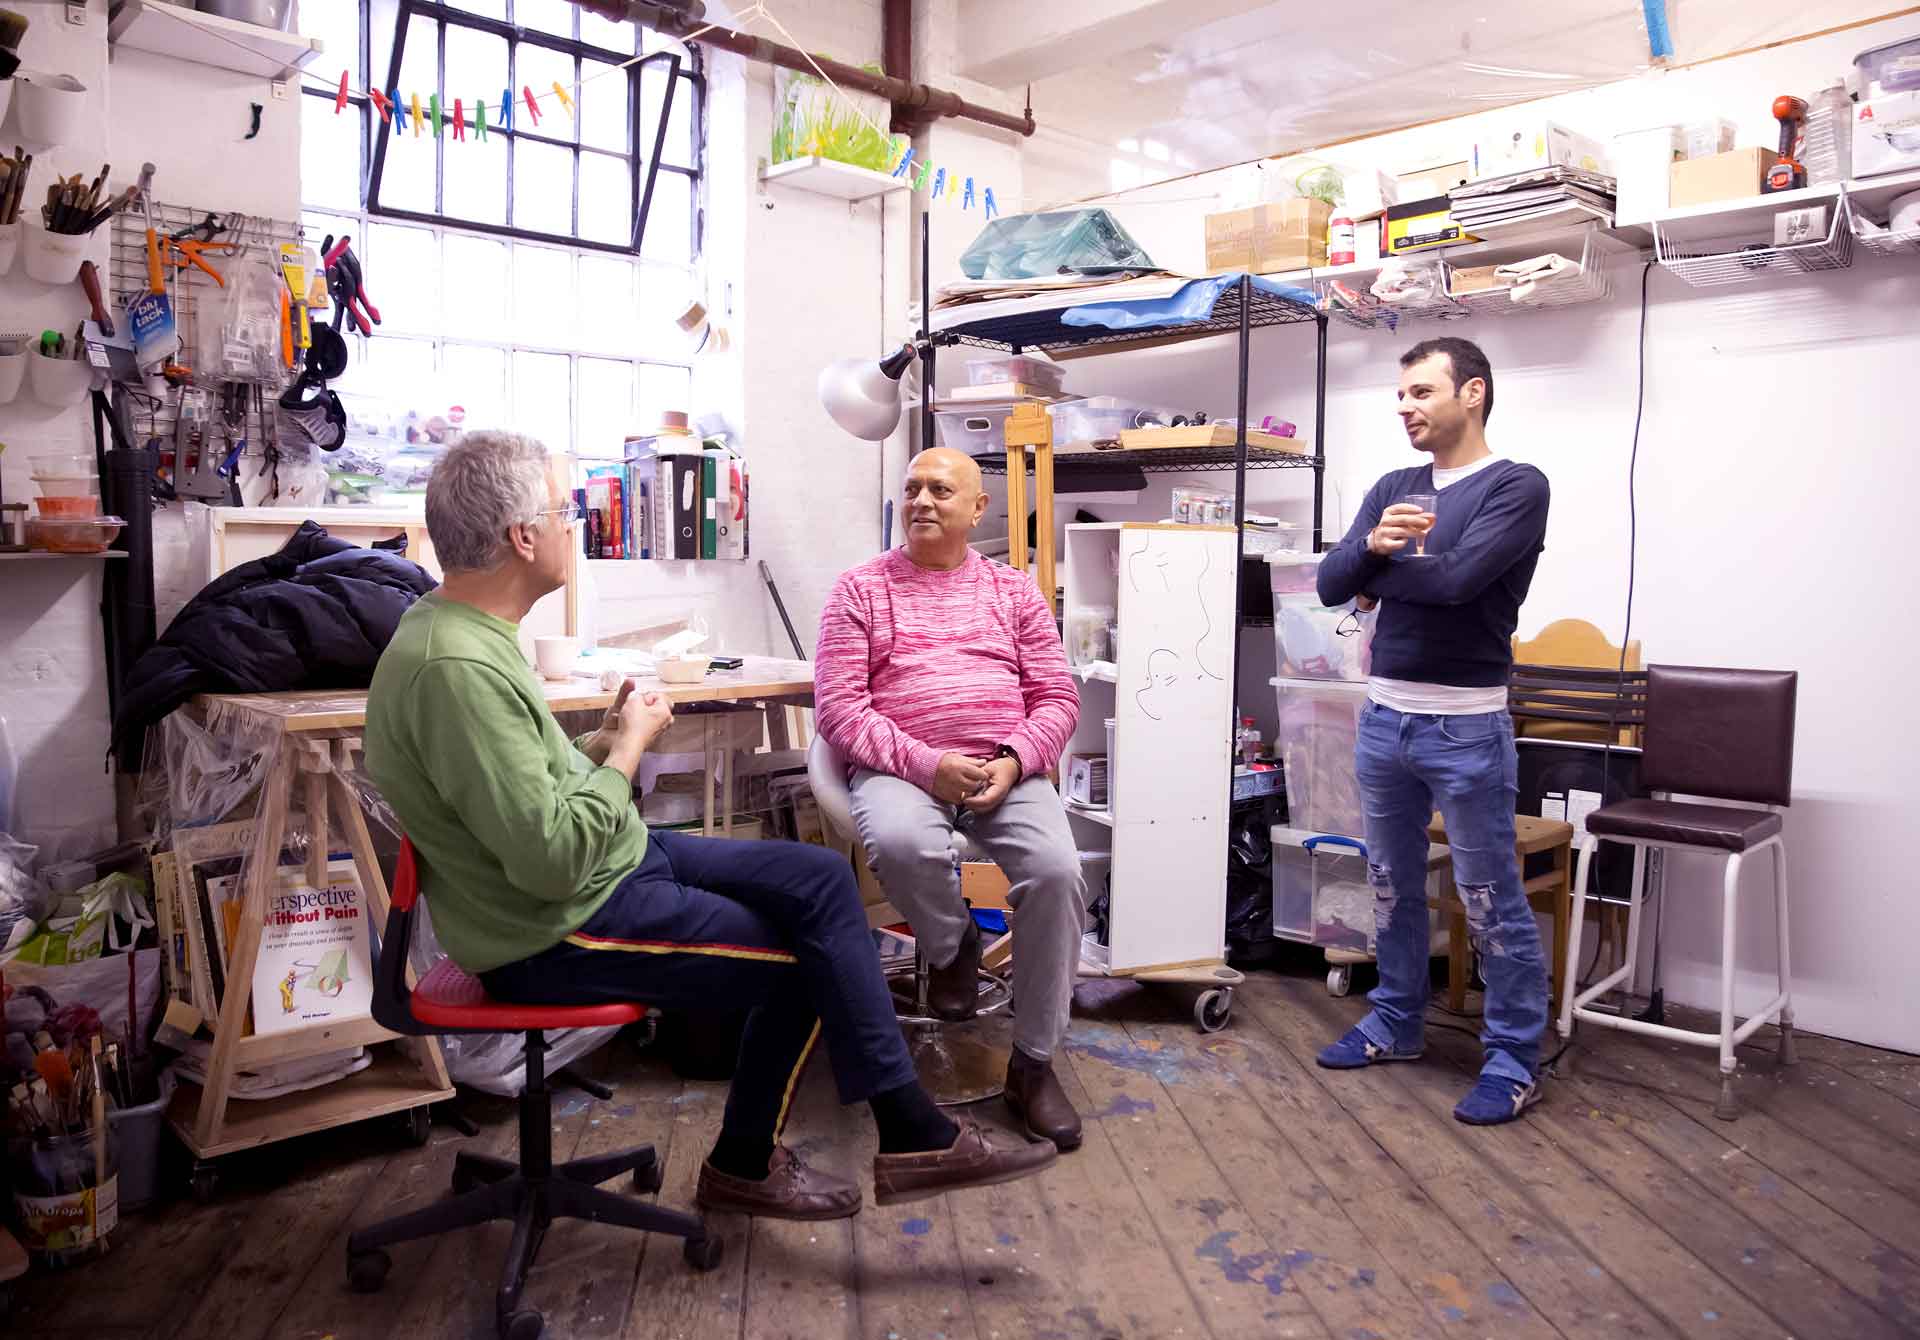 Three people sit in an artist's studio